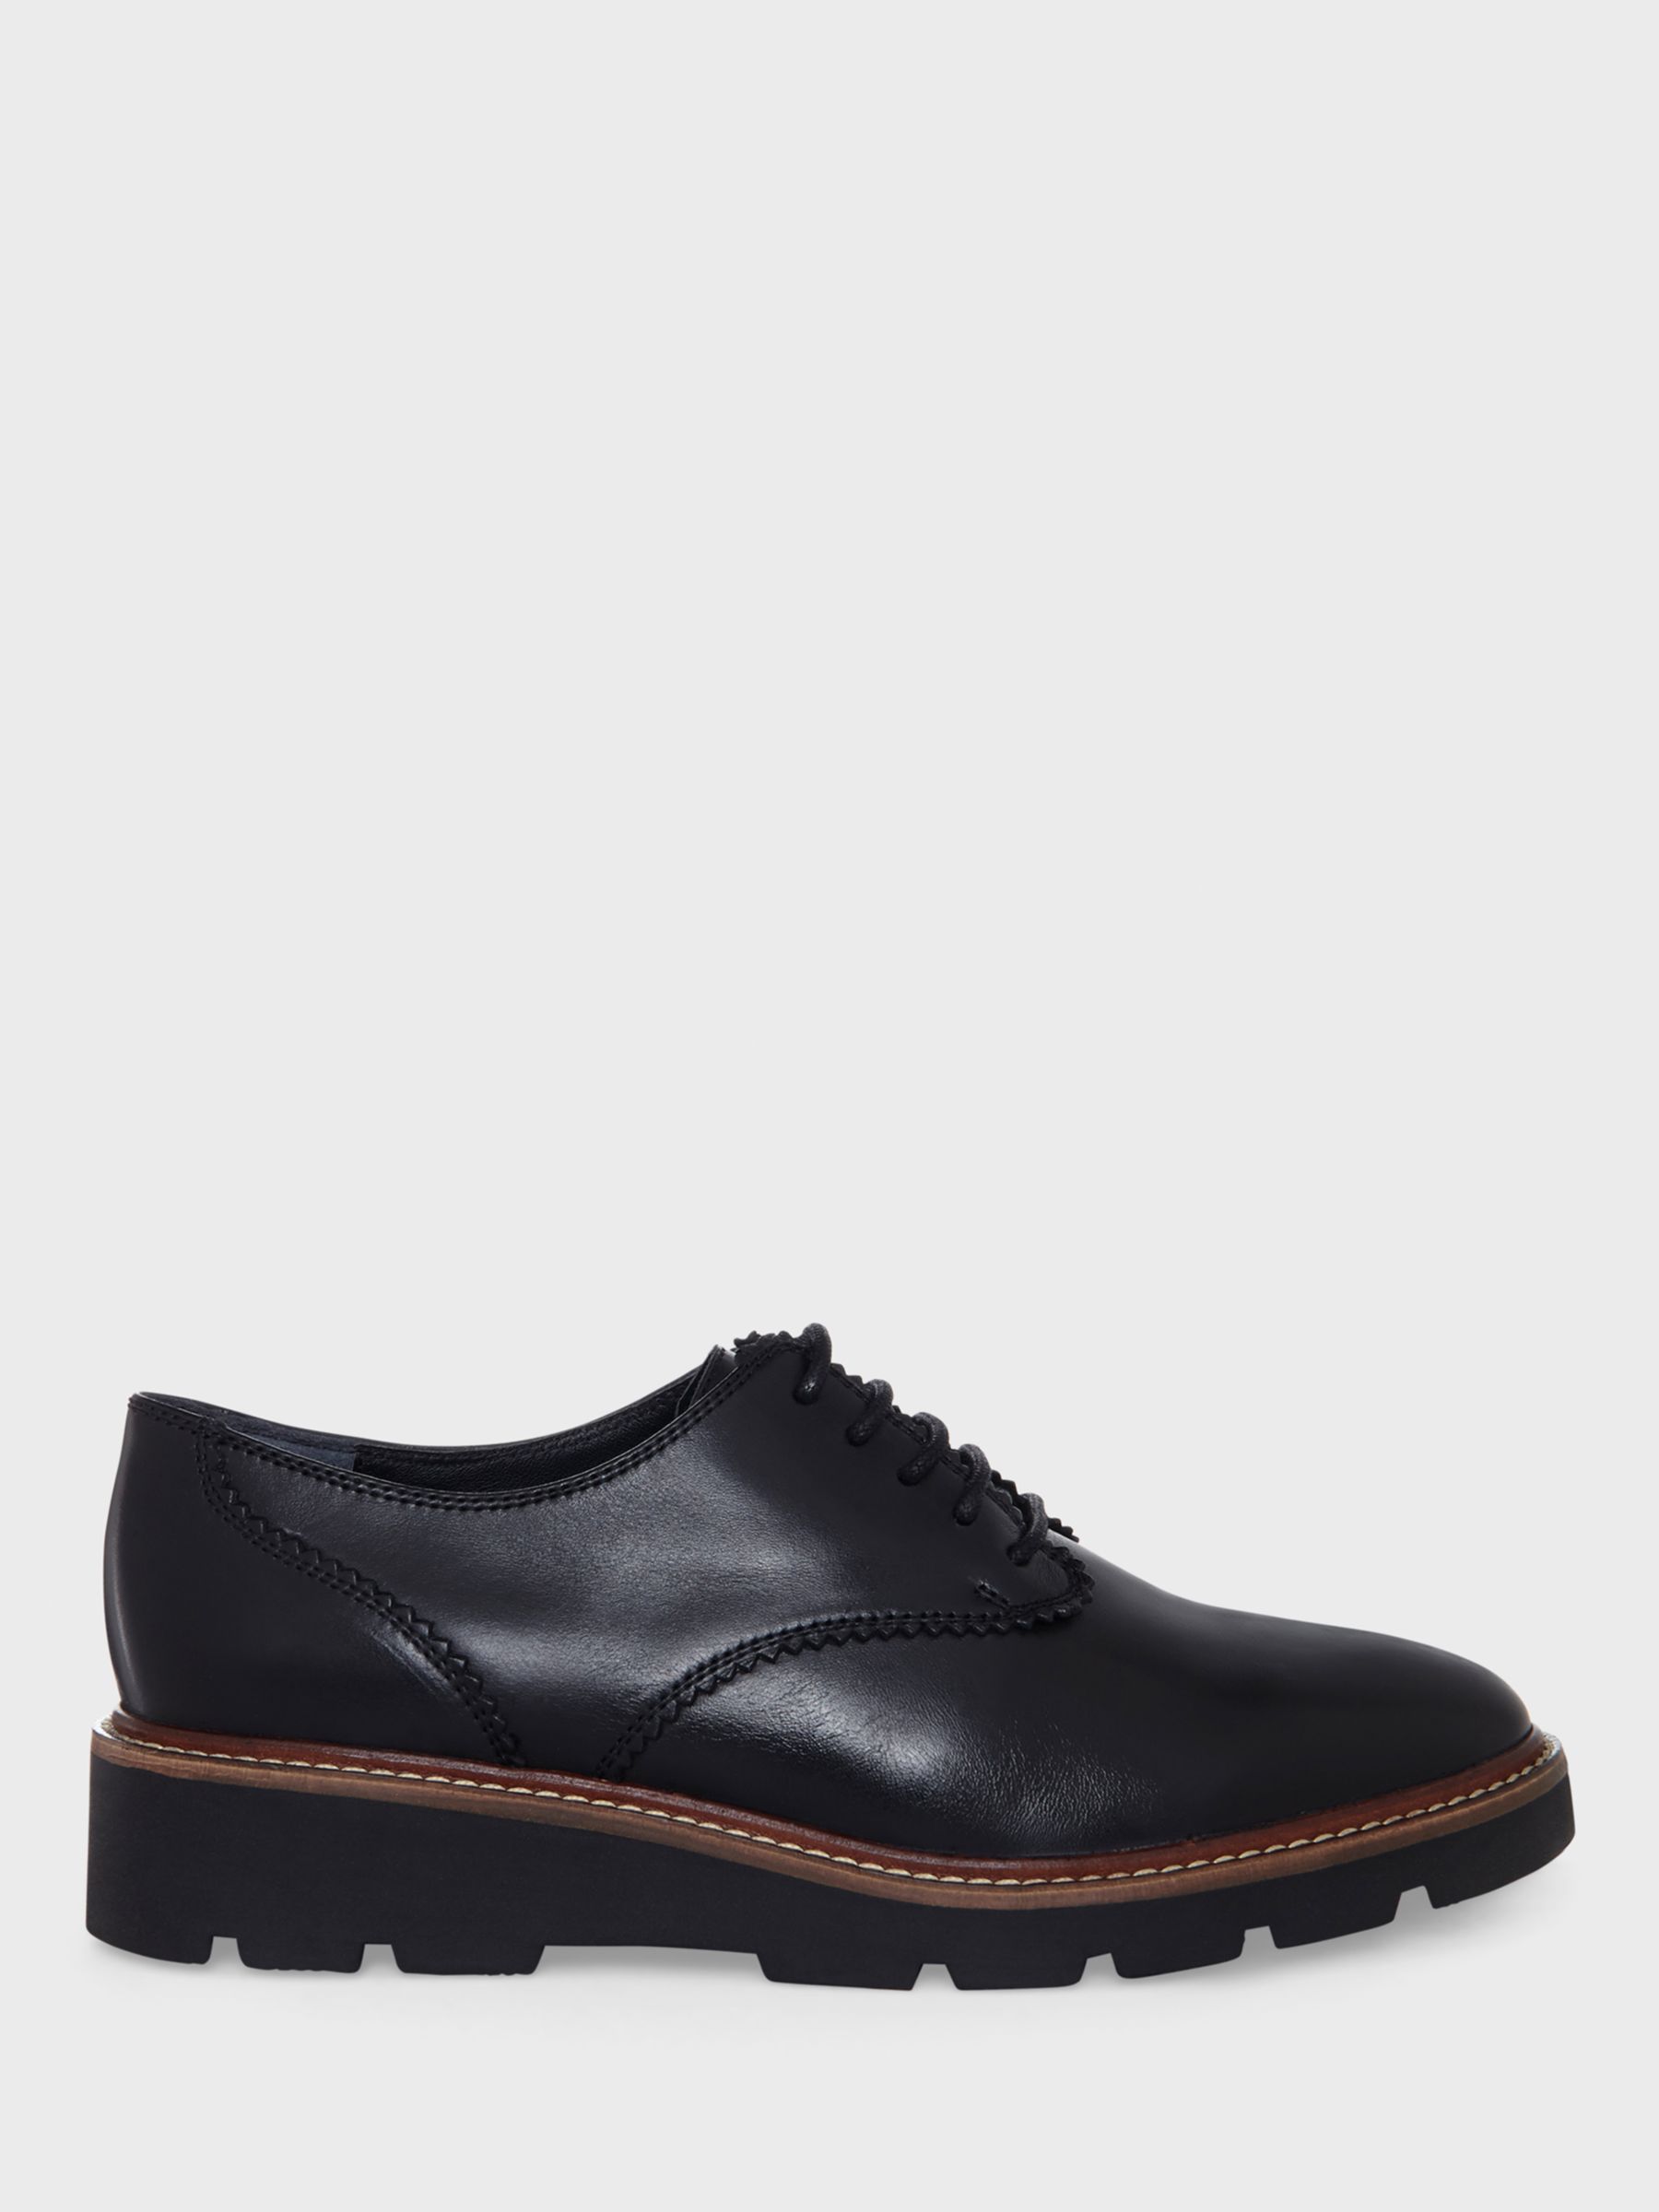 Hobbs Chelsey Leather Flatform Brogues, Black, 3